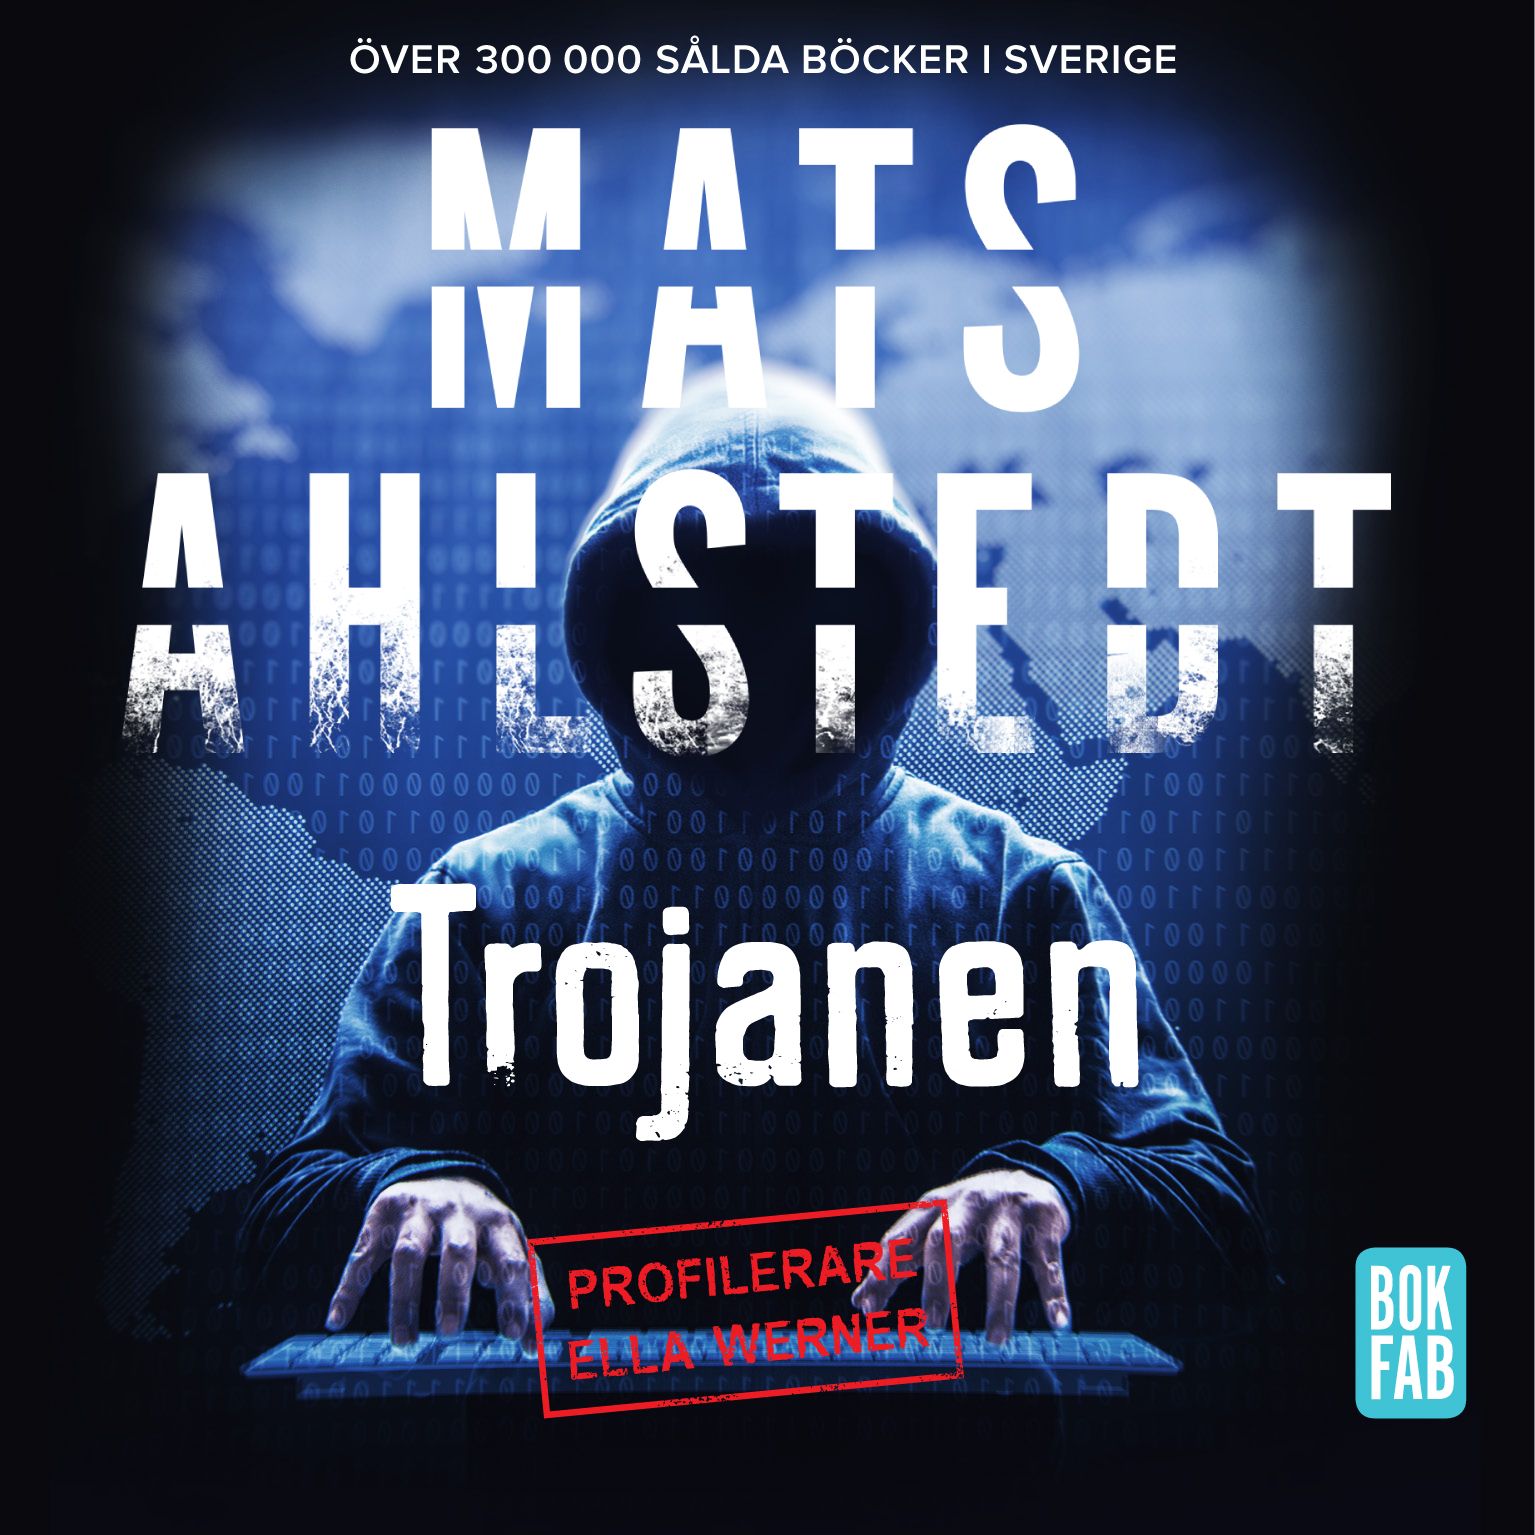 Trojanen, audiobook by Mats Ahlstedt